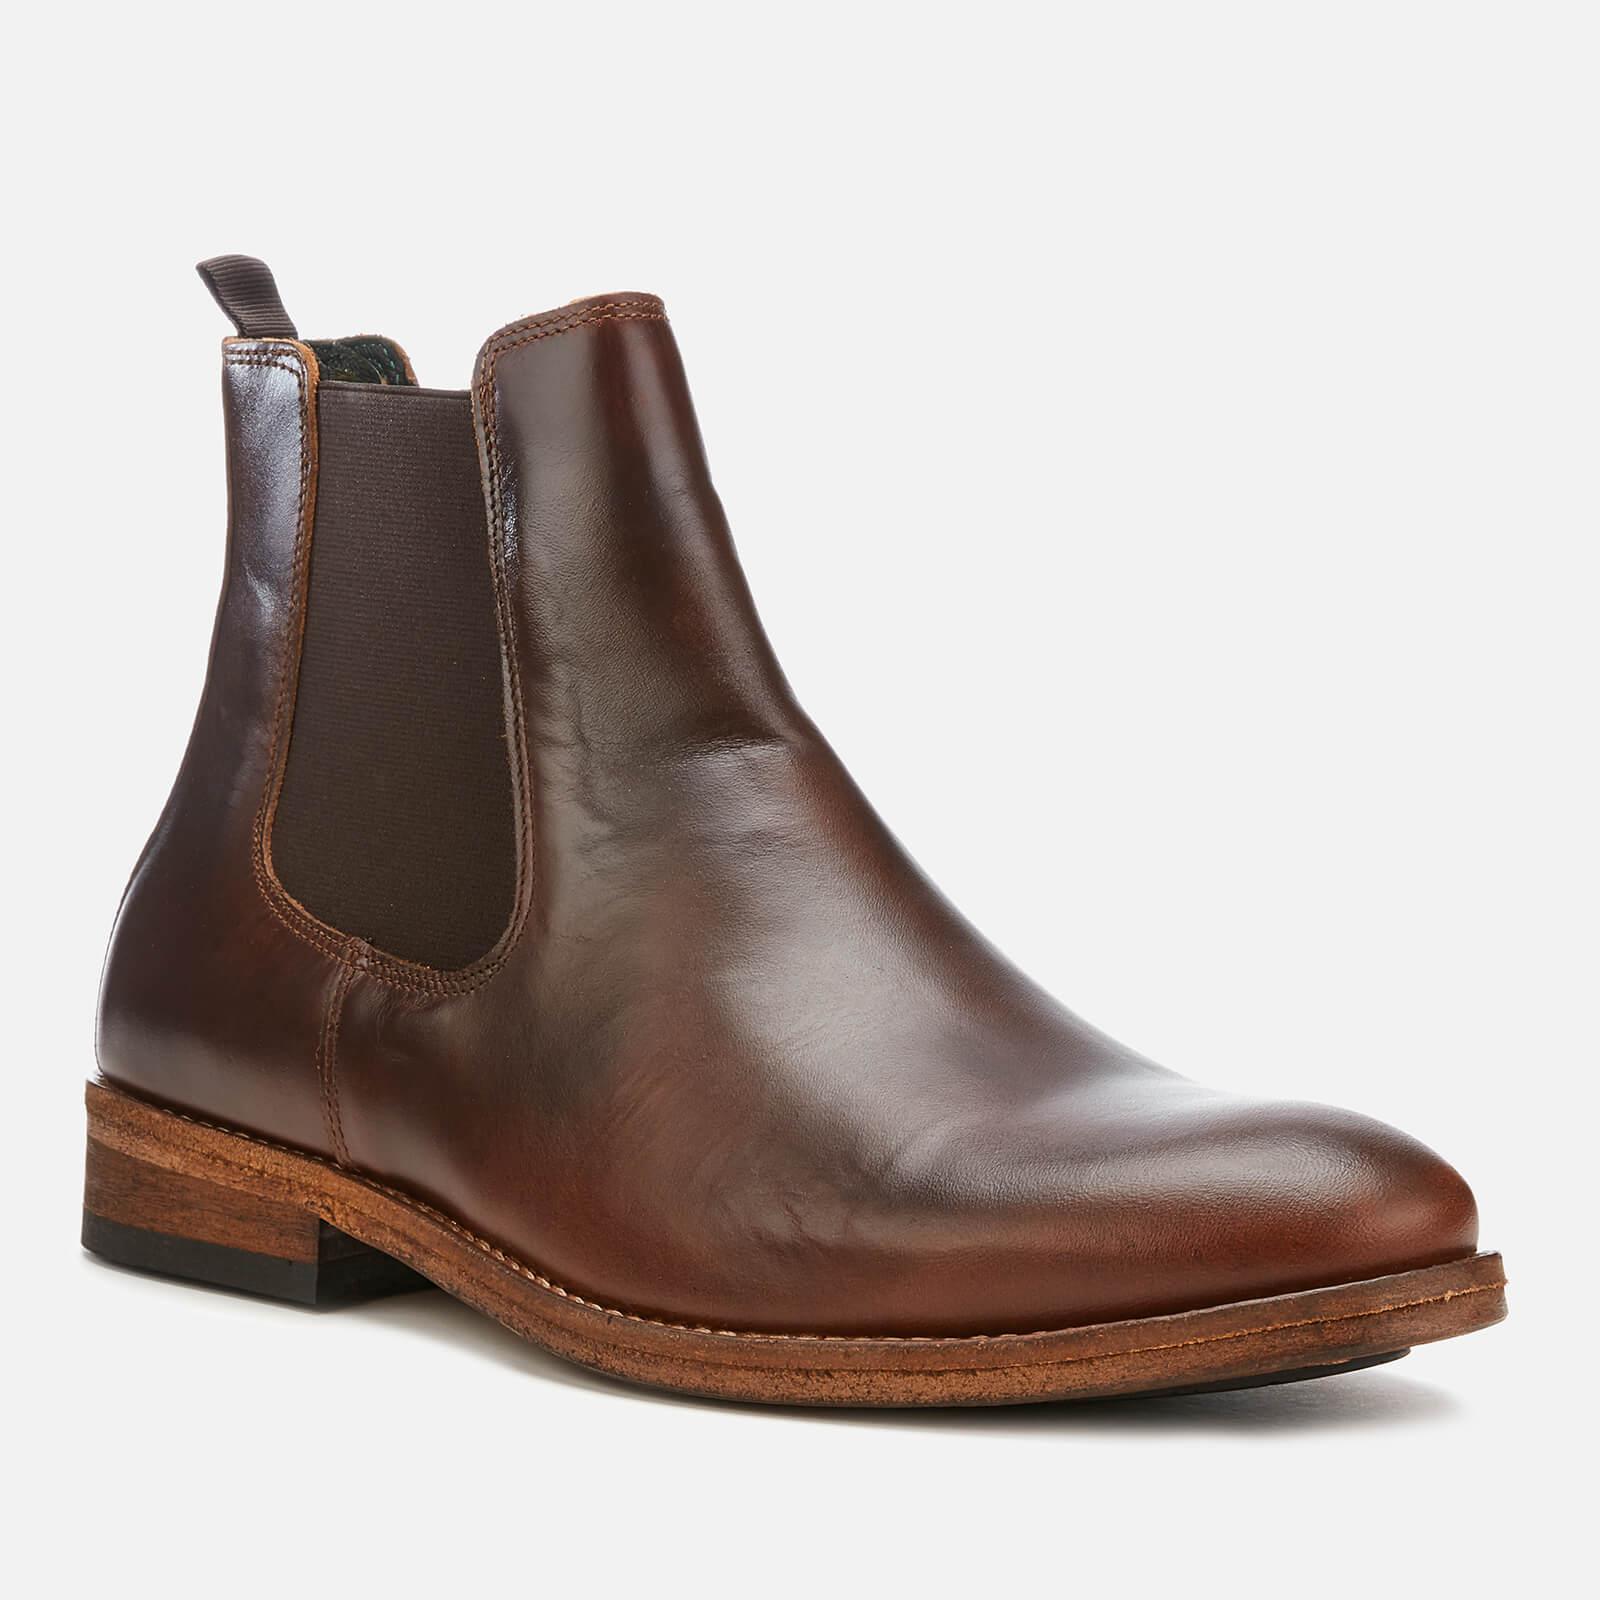 Barbour Men's Bedlington Leather Chelsea Boots in Brown for Men - Lyst